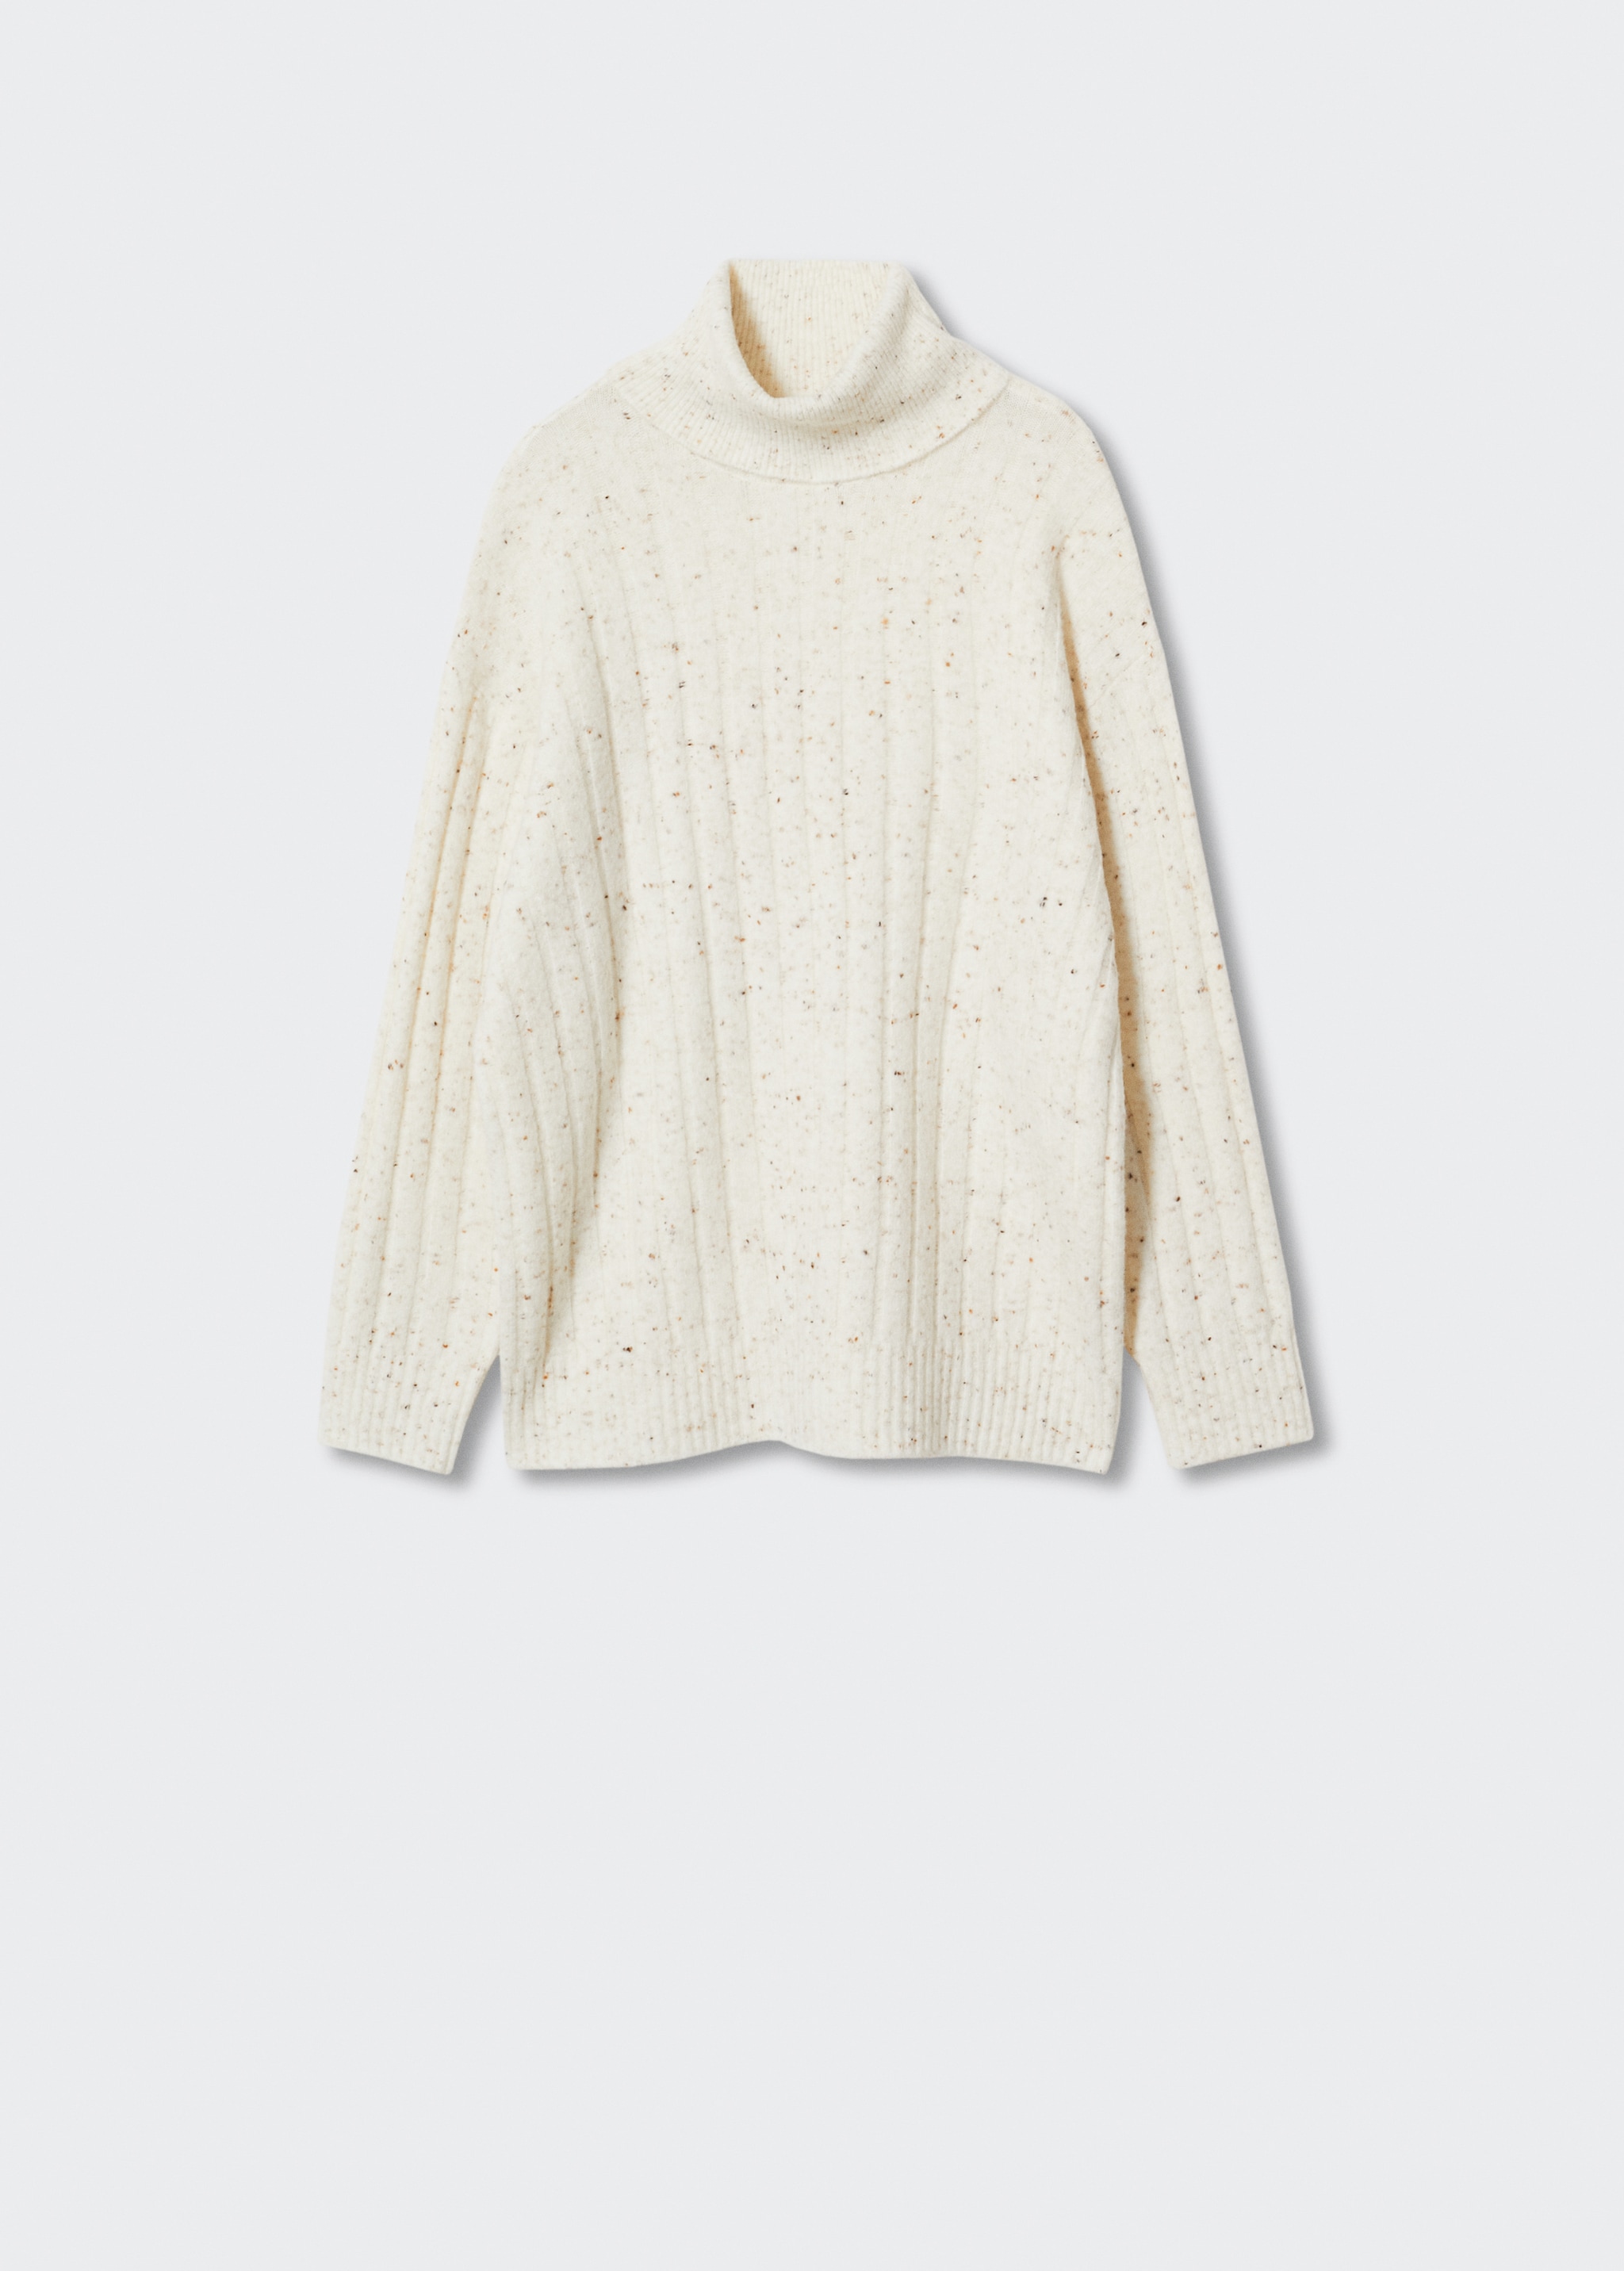 Fleece turtleneck sweater - Article without model